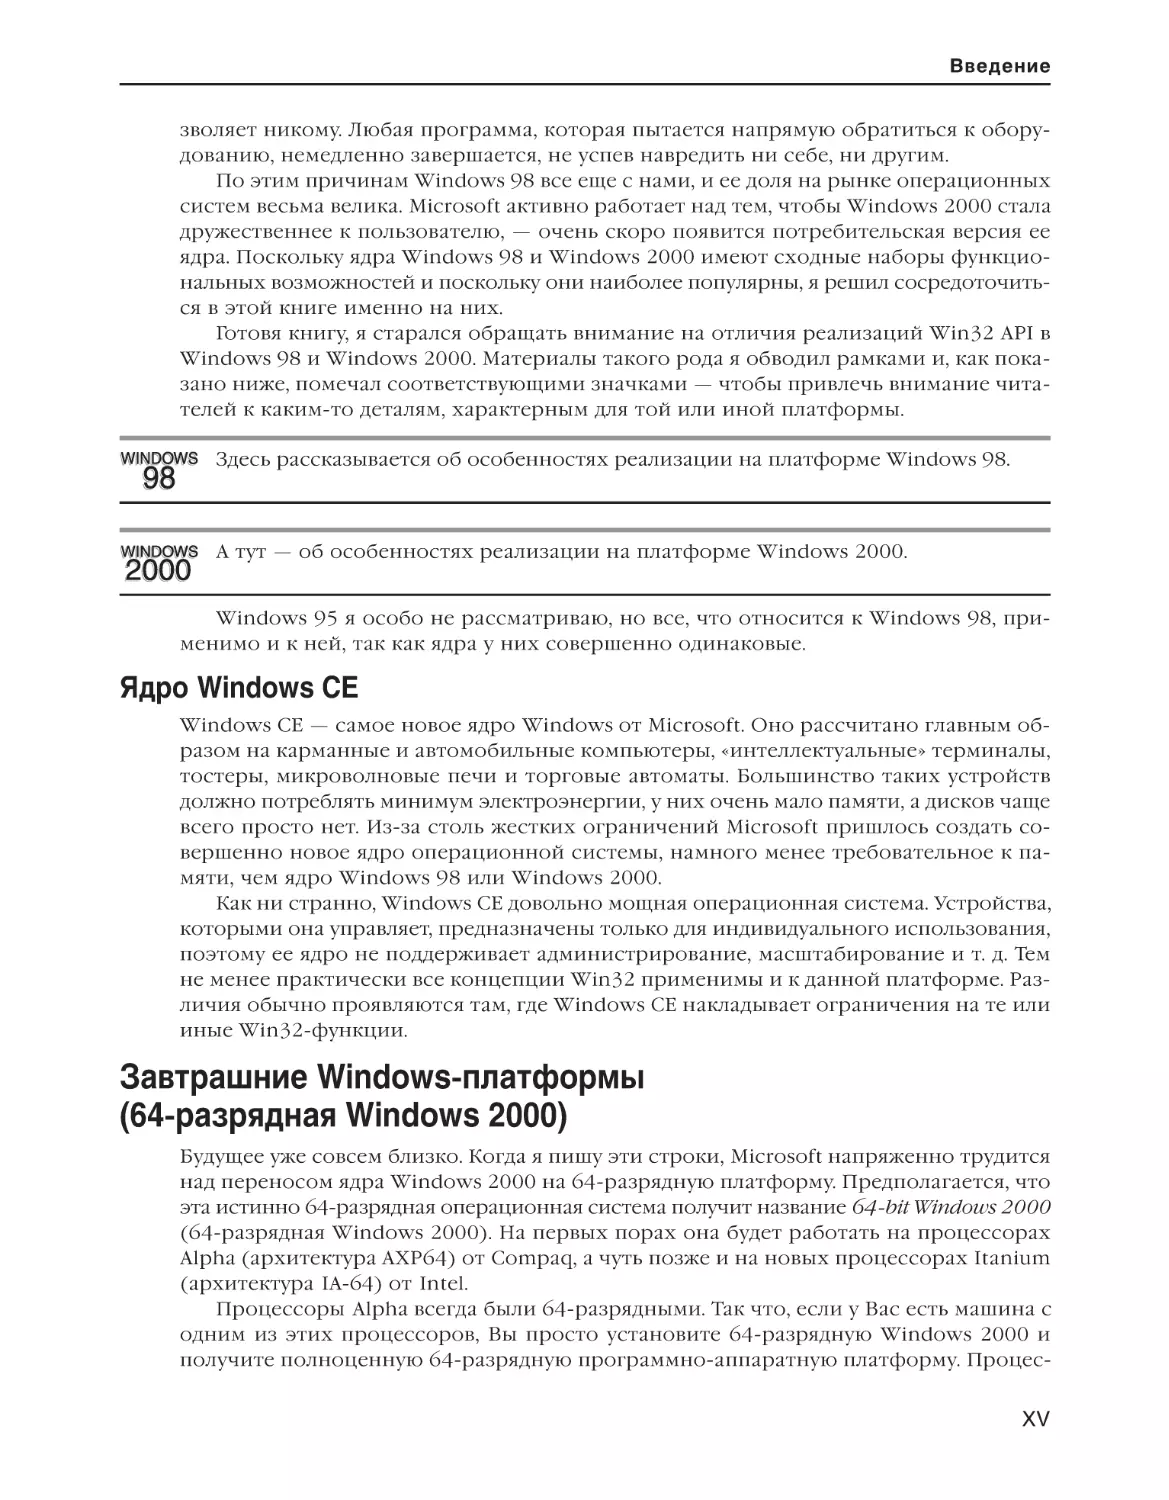 Ядро Windows CE
Завтрашние Windows-платформы (64-разрядная Windows 2000)